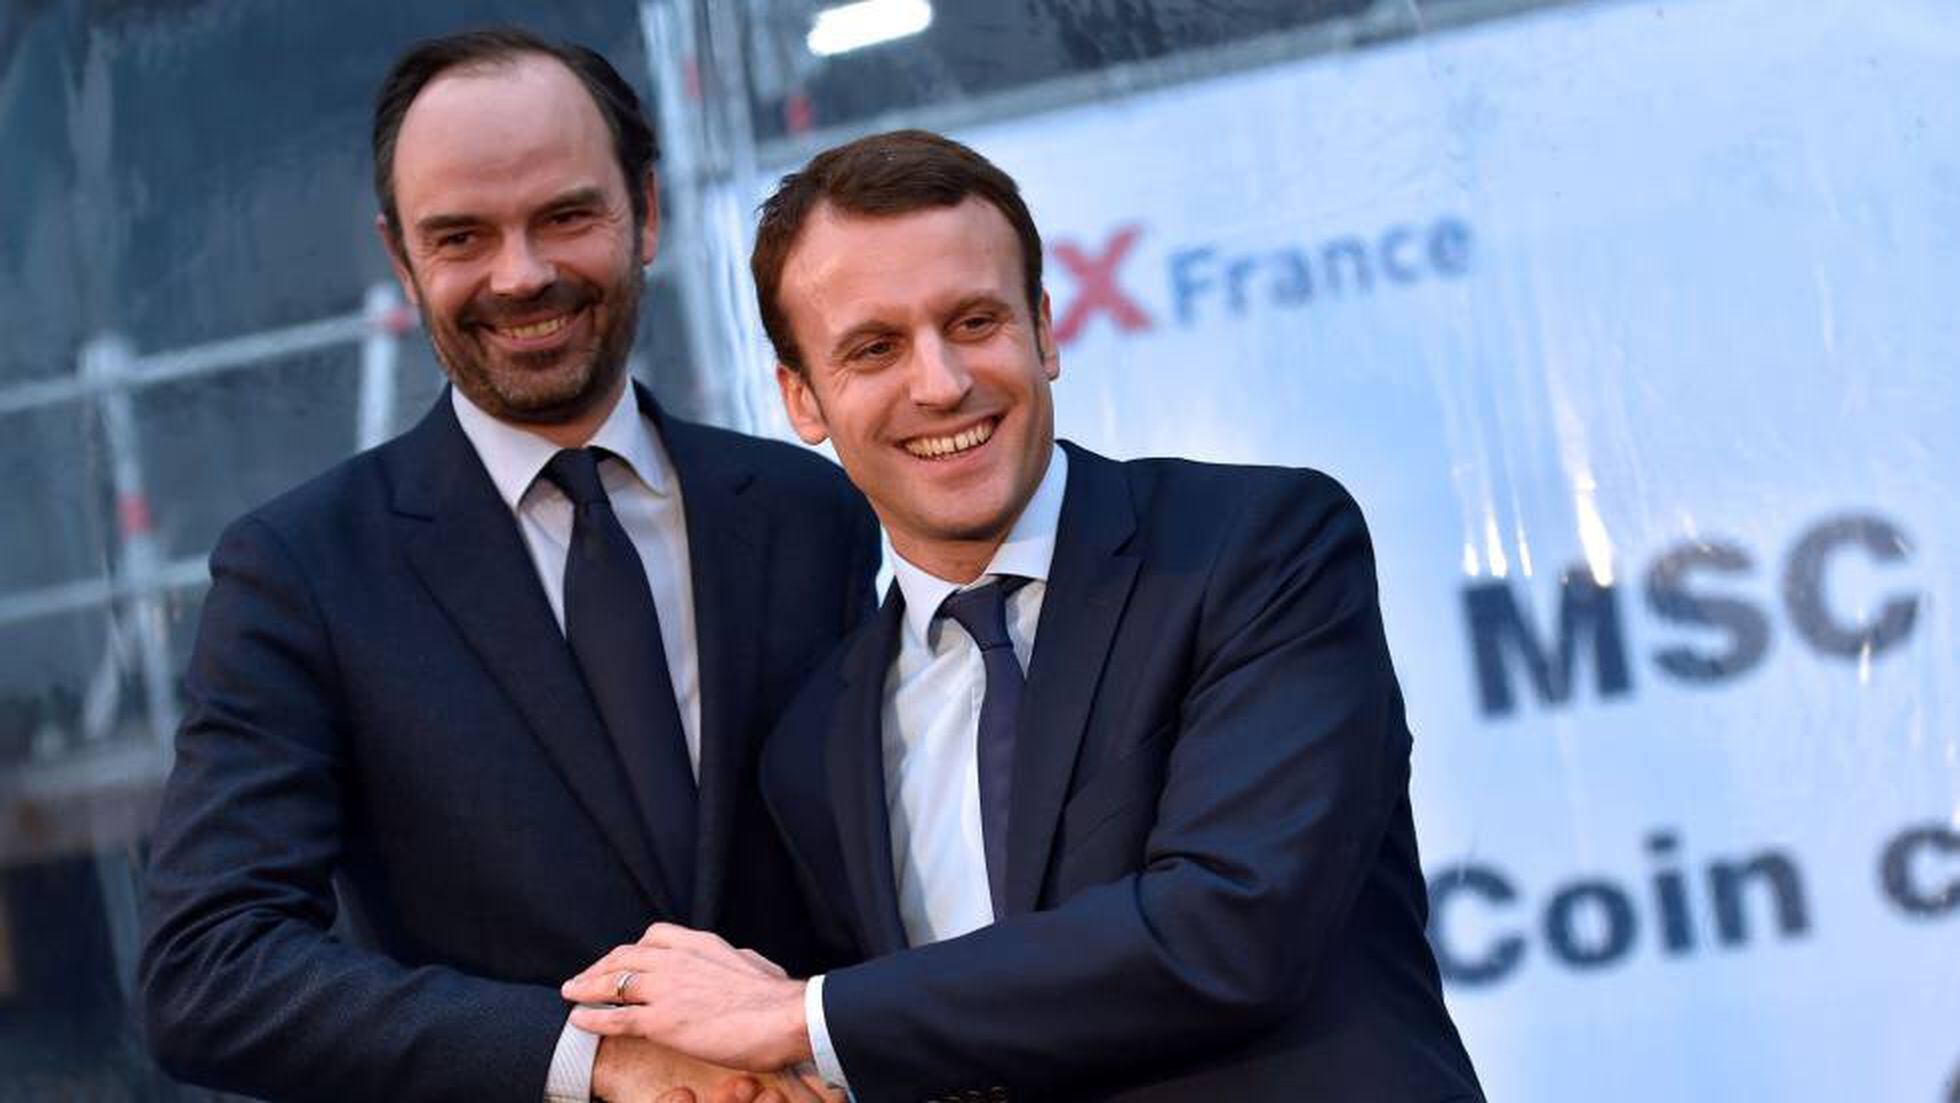 Macron nombra primer ministro al conservador moderado Édouard Philippe |  Internacional | EL PAÍS